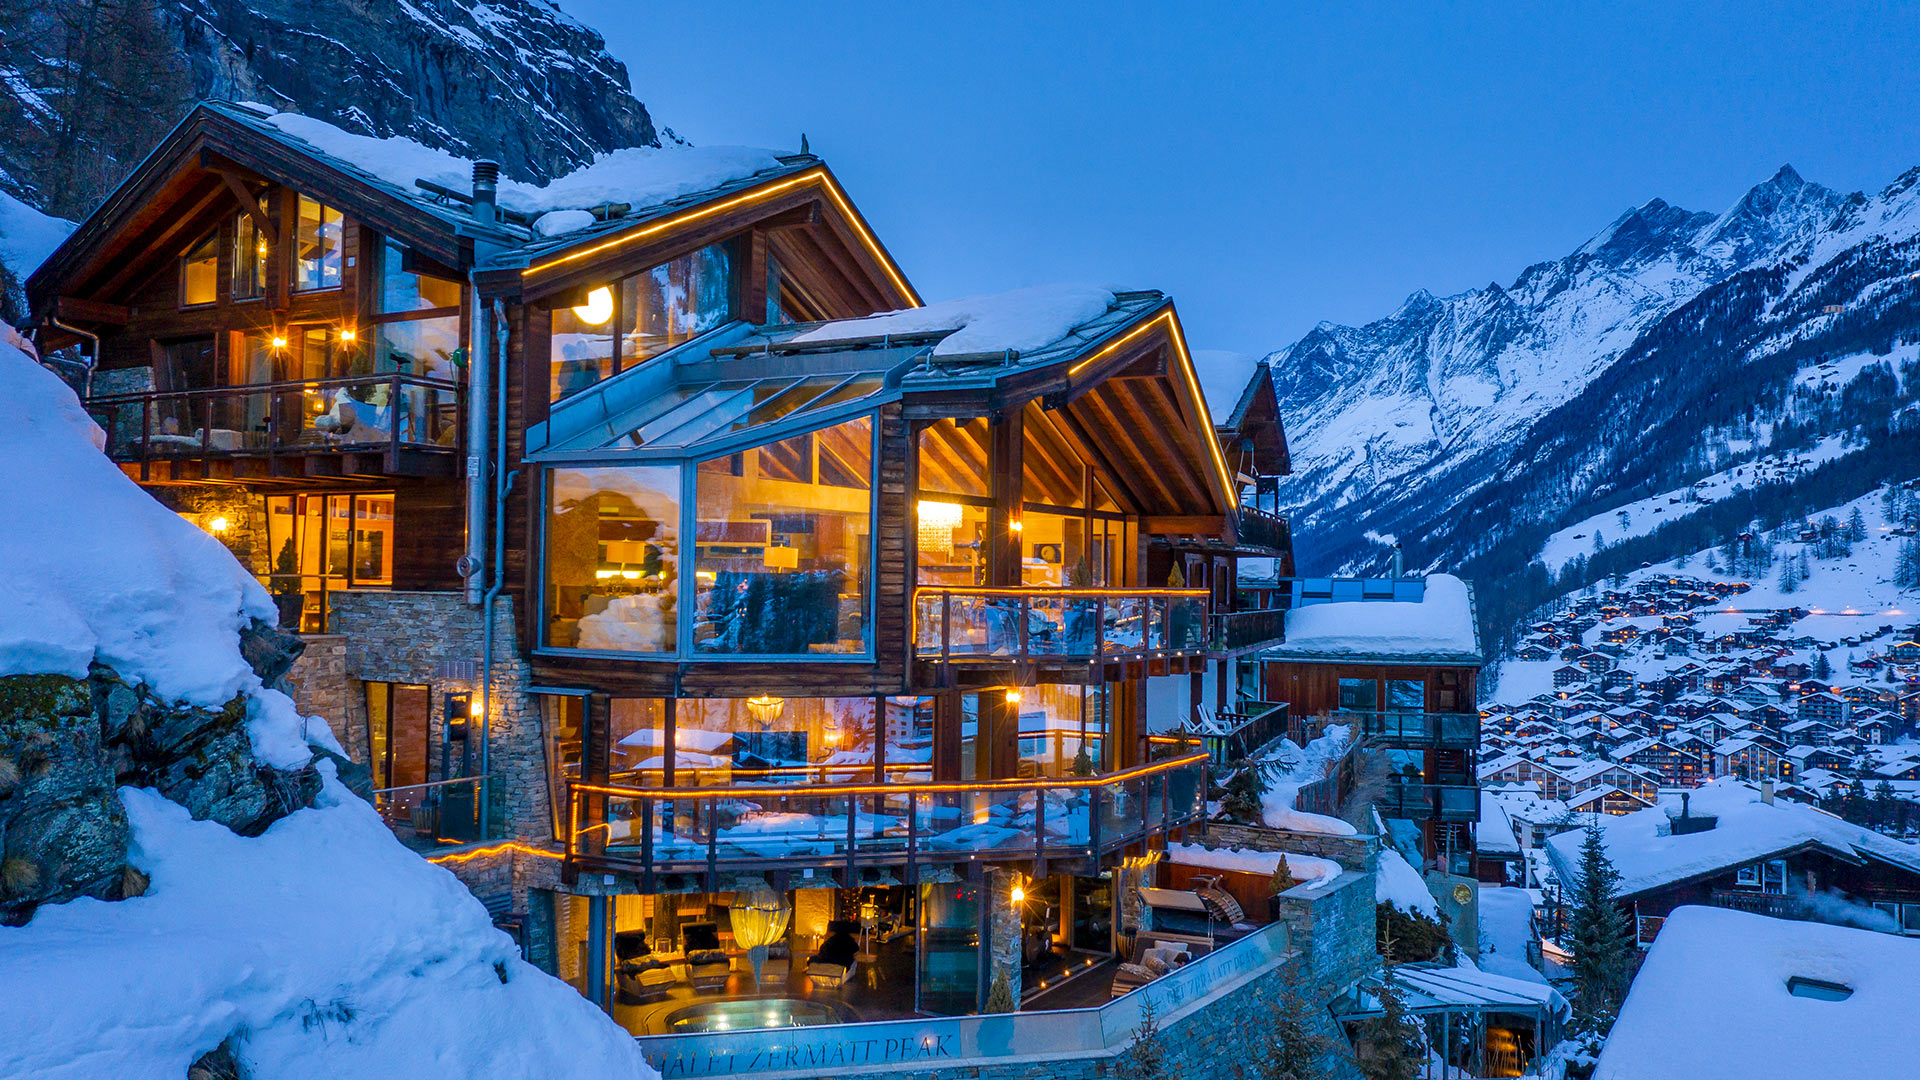 Chalet CZP - Alquiler de casa en Alpes suizos, Zermatt | Villanovo